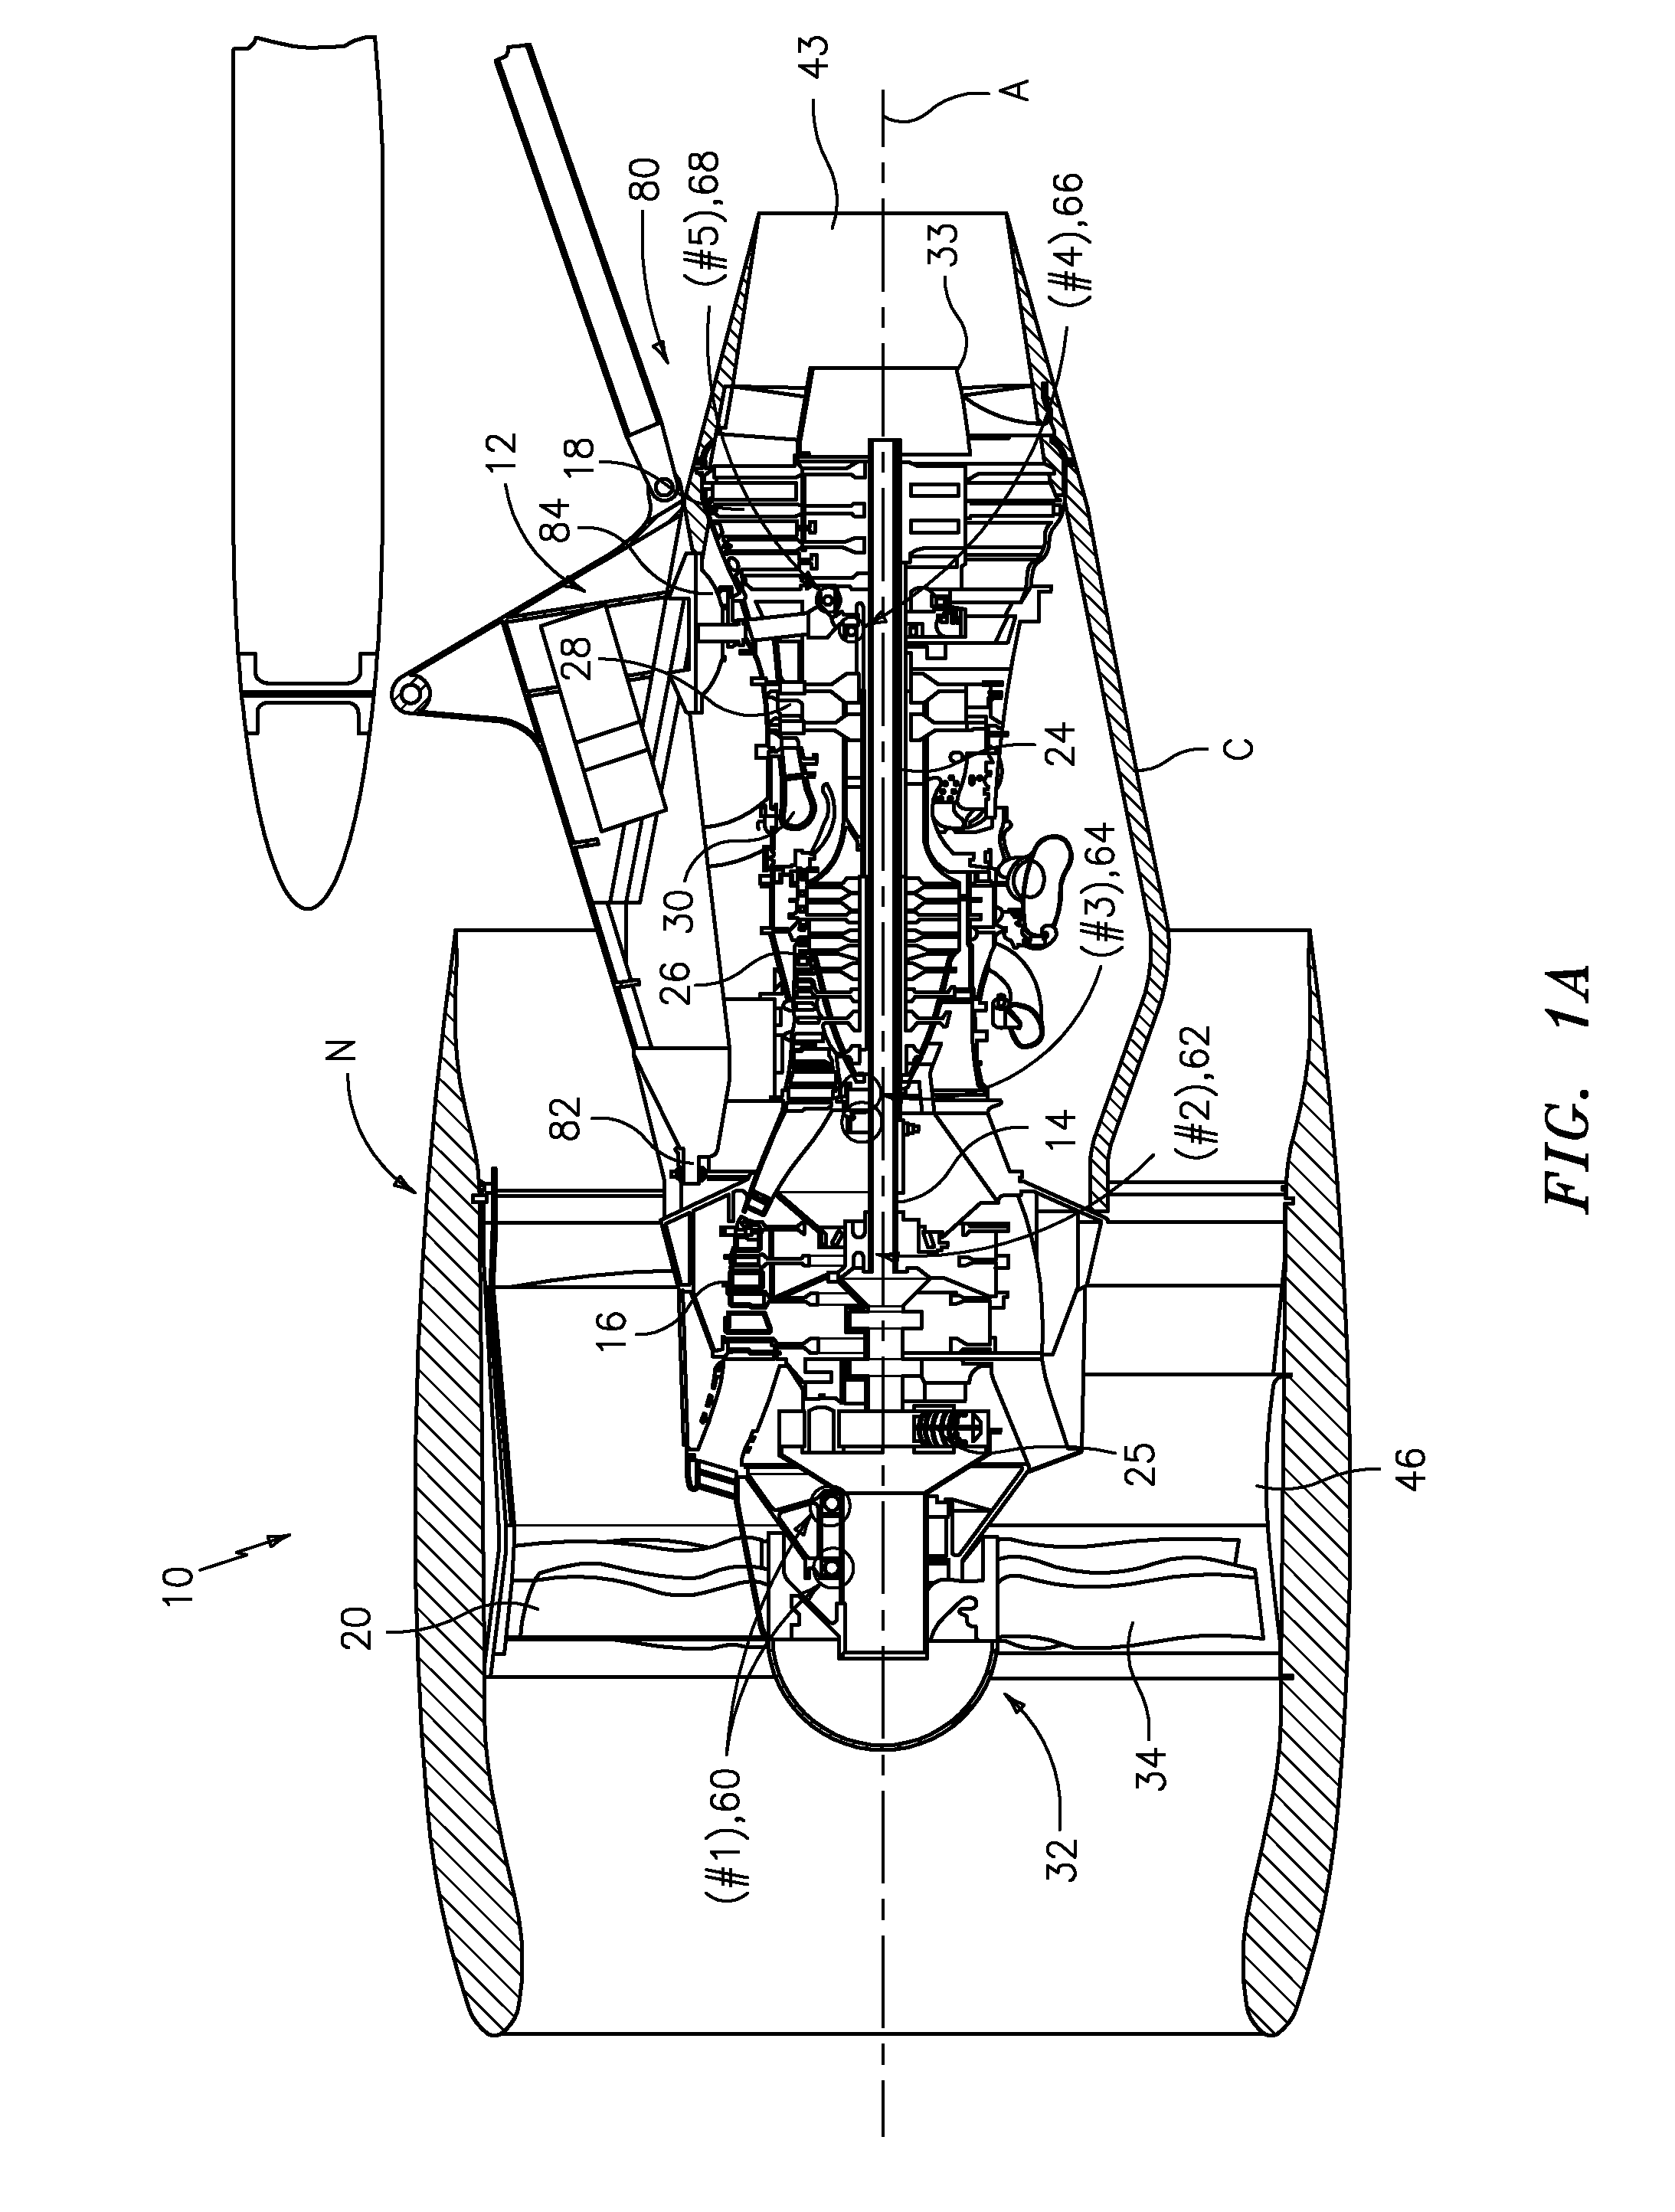 Engine mounting configuration for a turbofan gas turbine engine